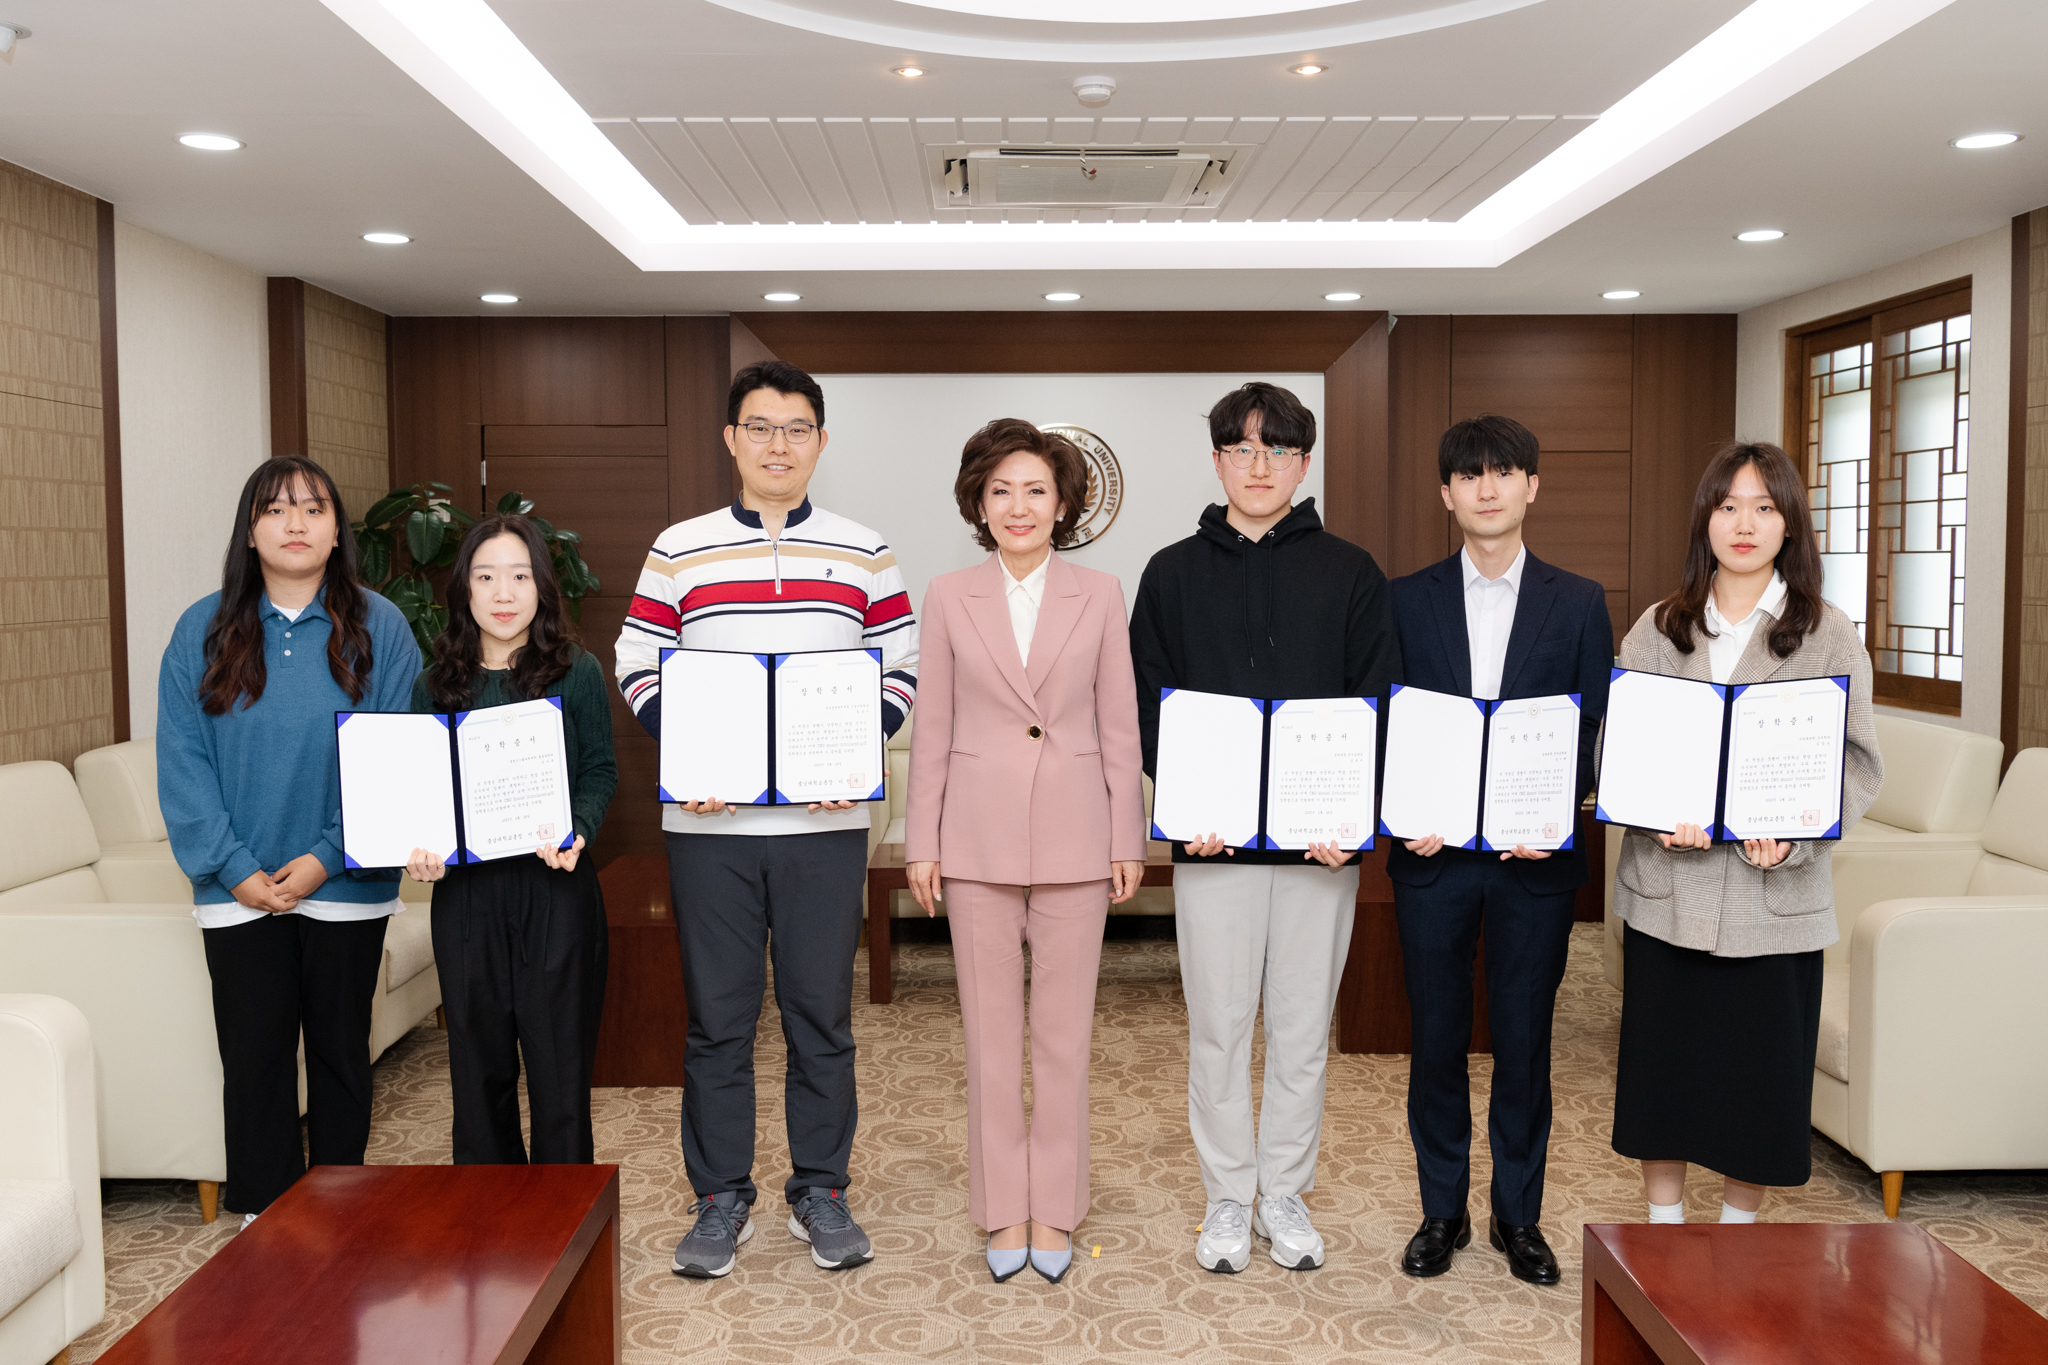 CNU Honor Scholarship 장학증서 전달식 개최 사진